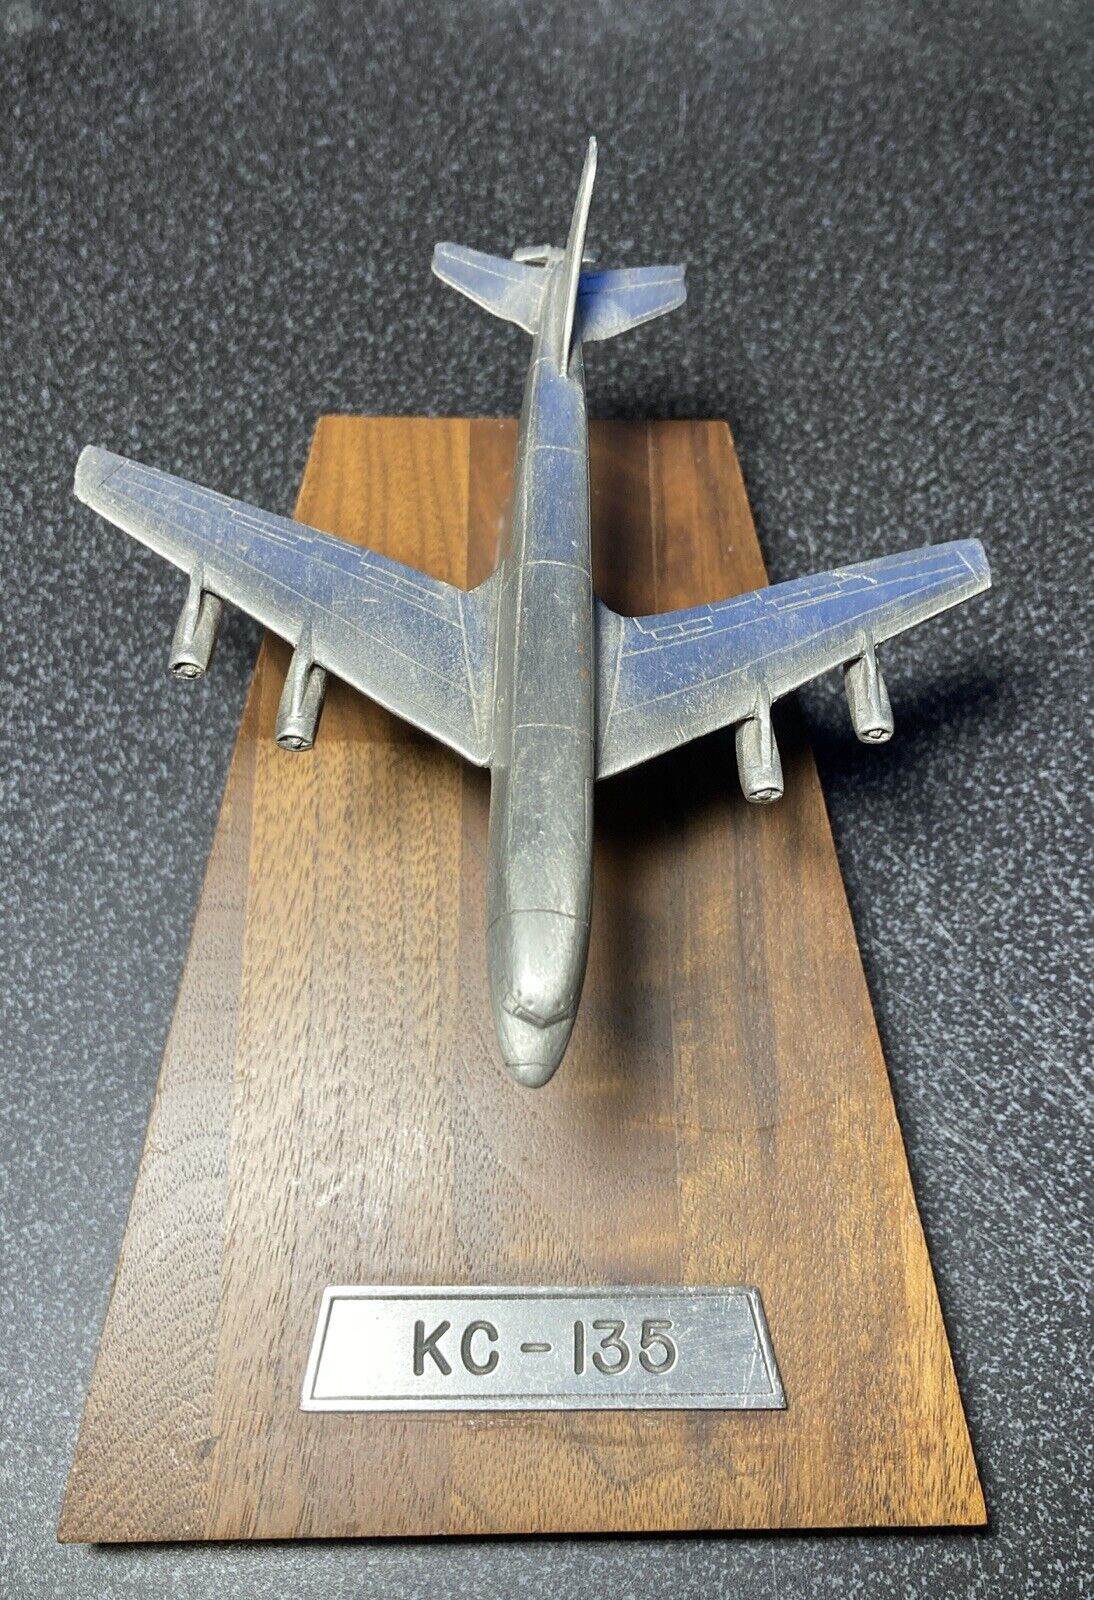 Boeing KC-135 Stratotanker Tanker Metal Model Airplane Vintage On Display Stand